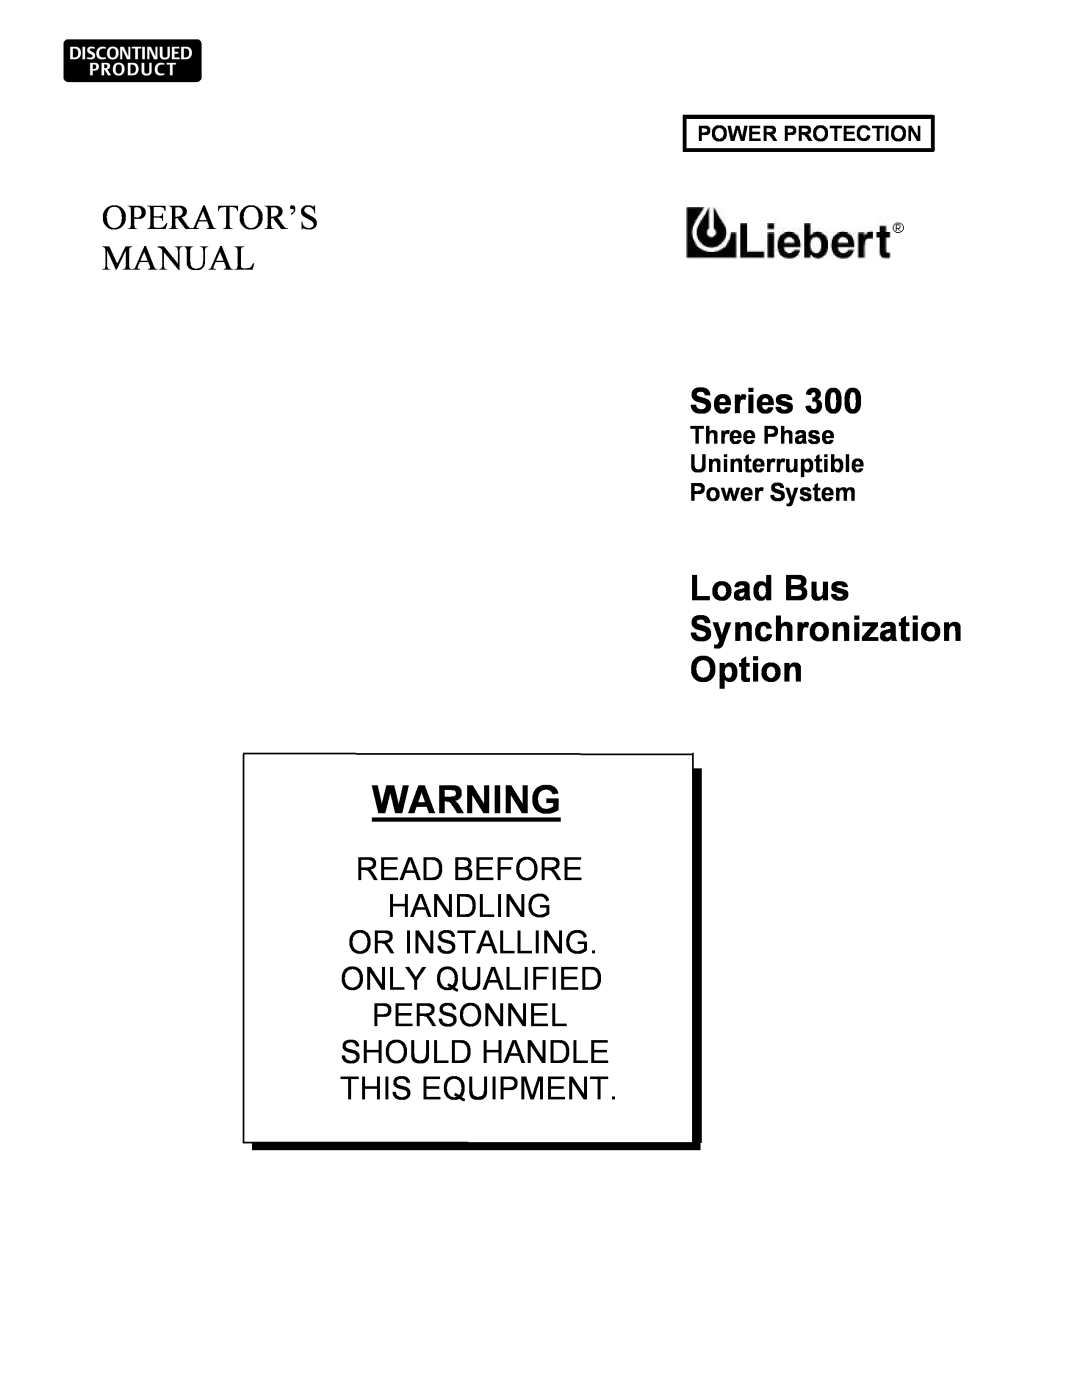 Liebert 300 installation manual Liqui-tect, Point Leak Detection Sensor, Monitoring, Installation Manual 